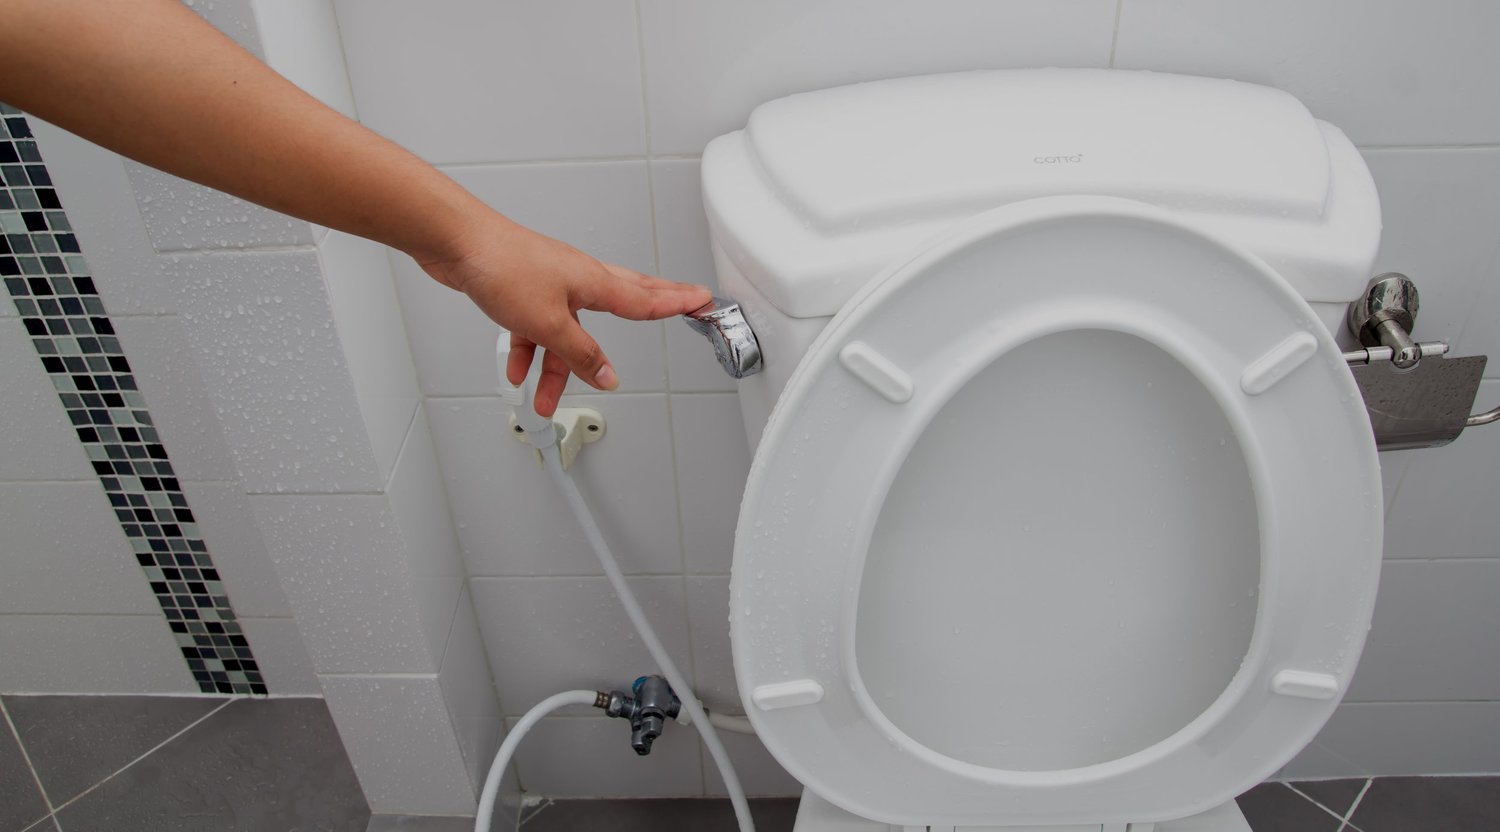 pressure assist toilet problems